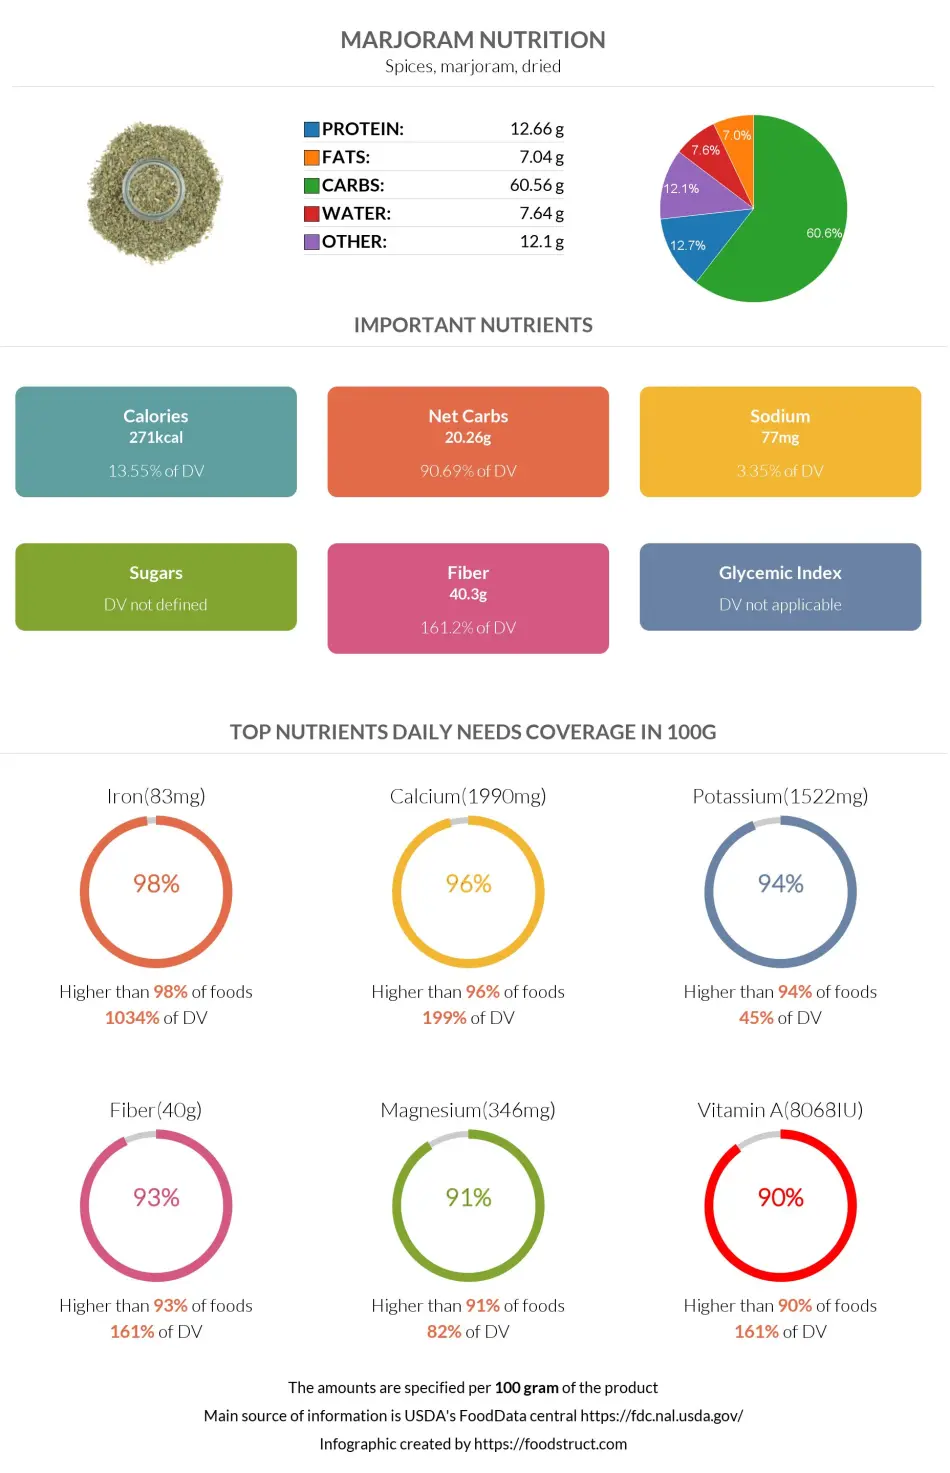 Marjoram nutrition infographic